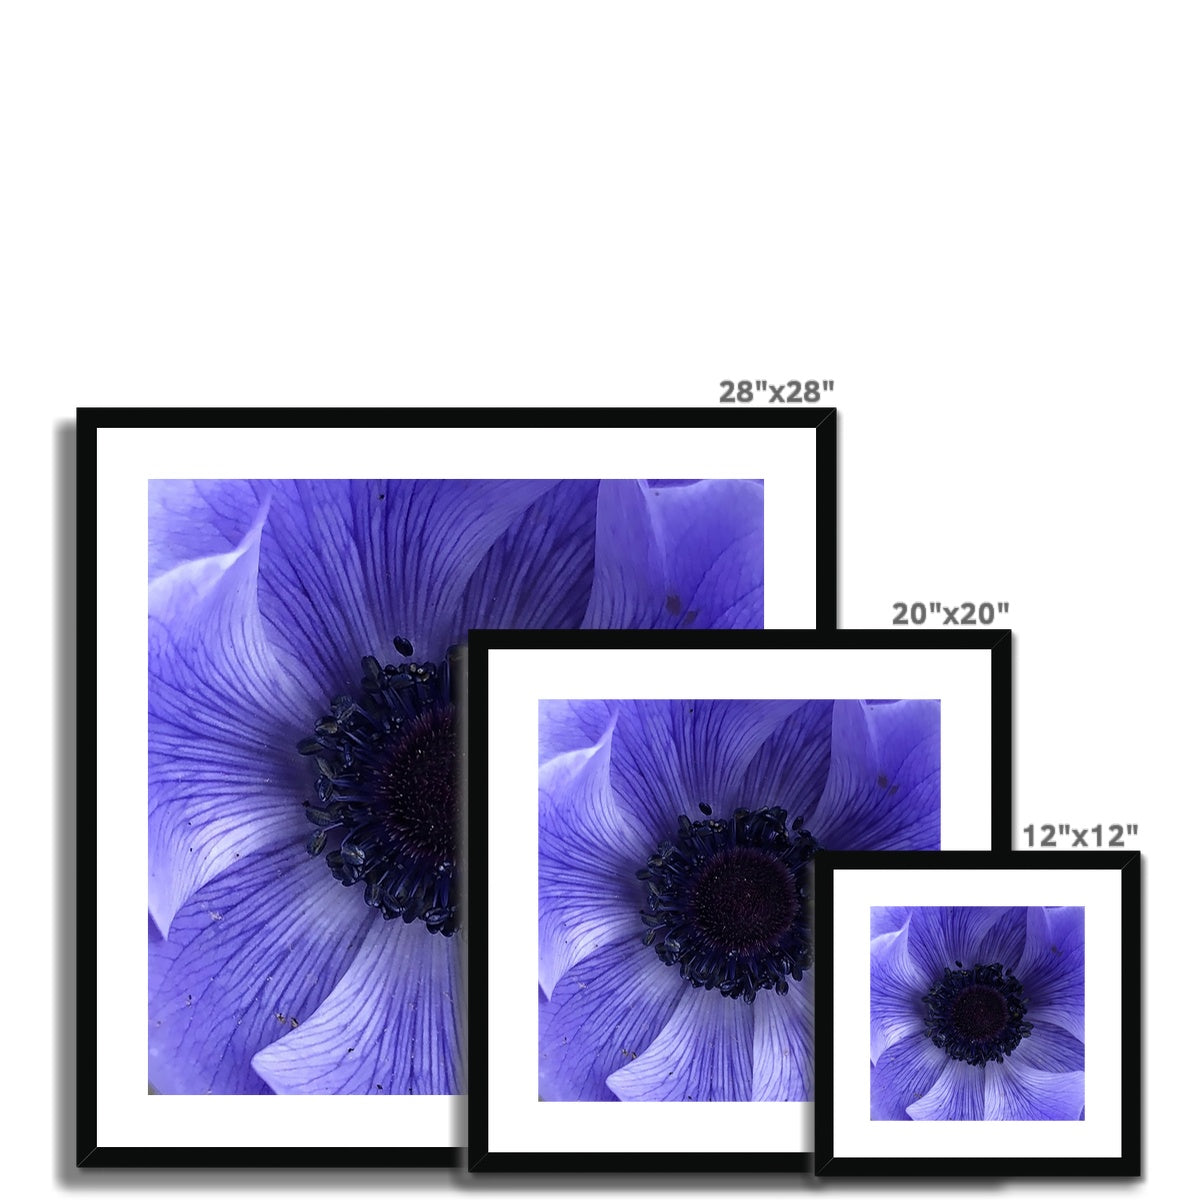 Blue Anemone Macro Flower Framed & Mounted Print